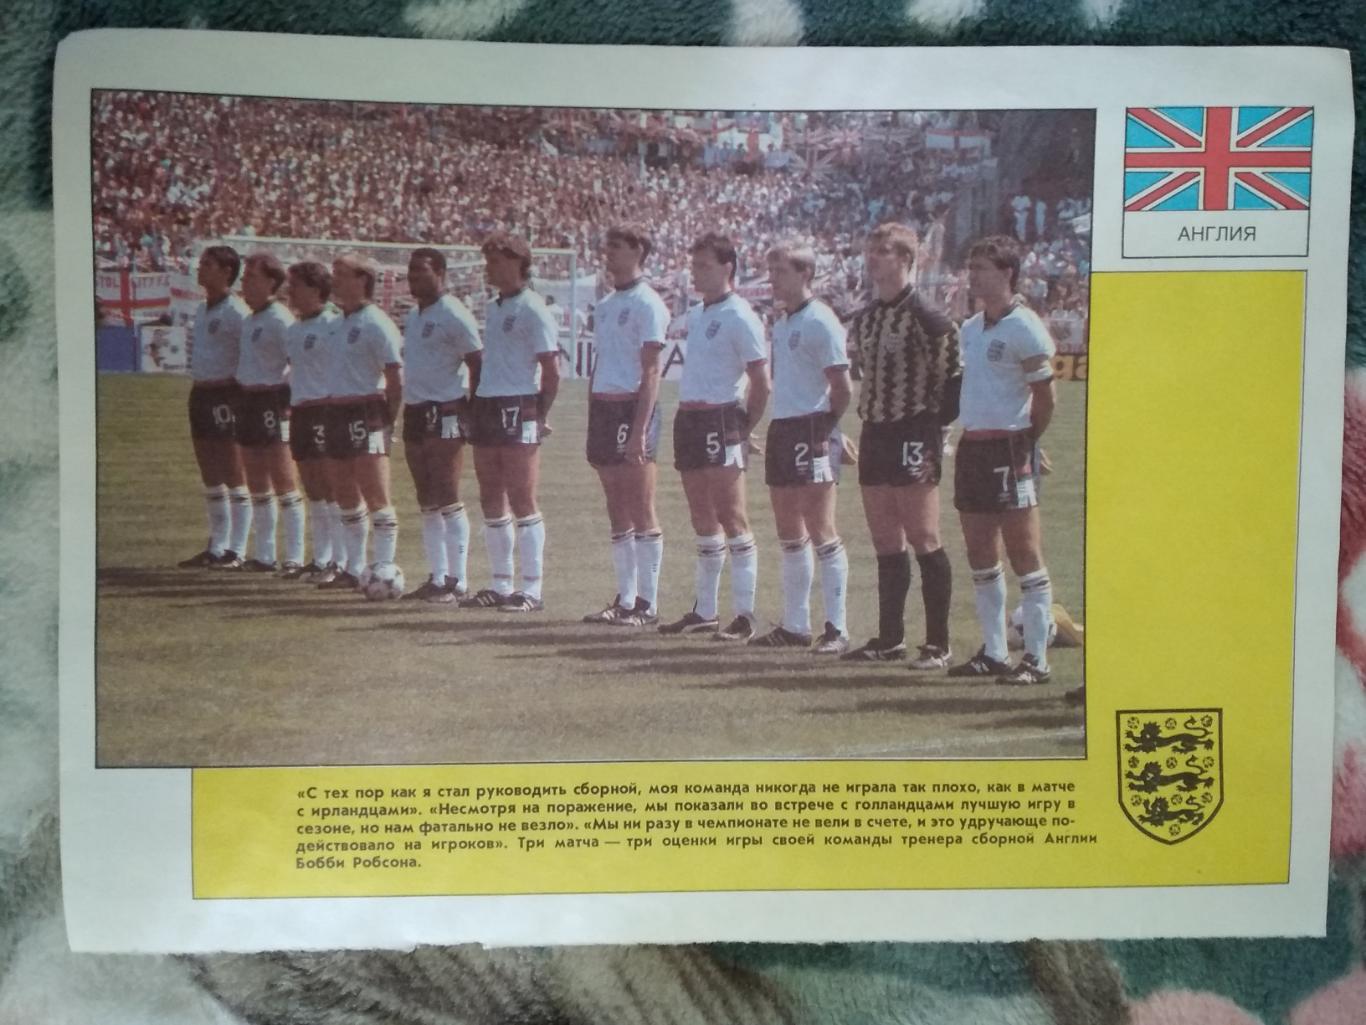 Постер.Футбол.Испания,Англия .Чемпионат Европы 1988. 1